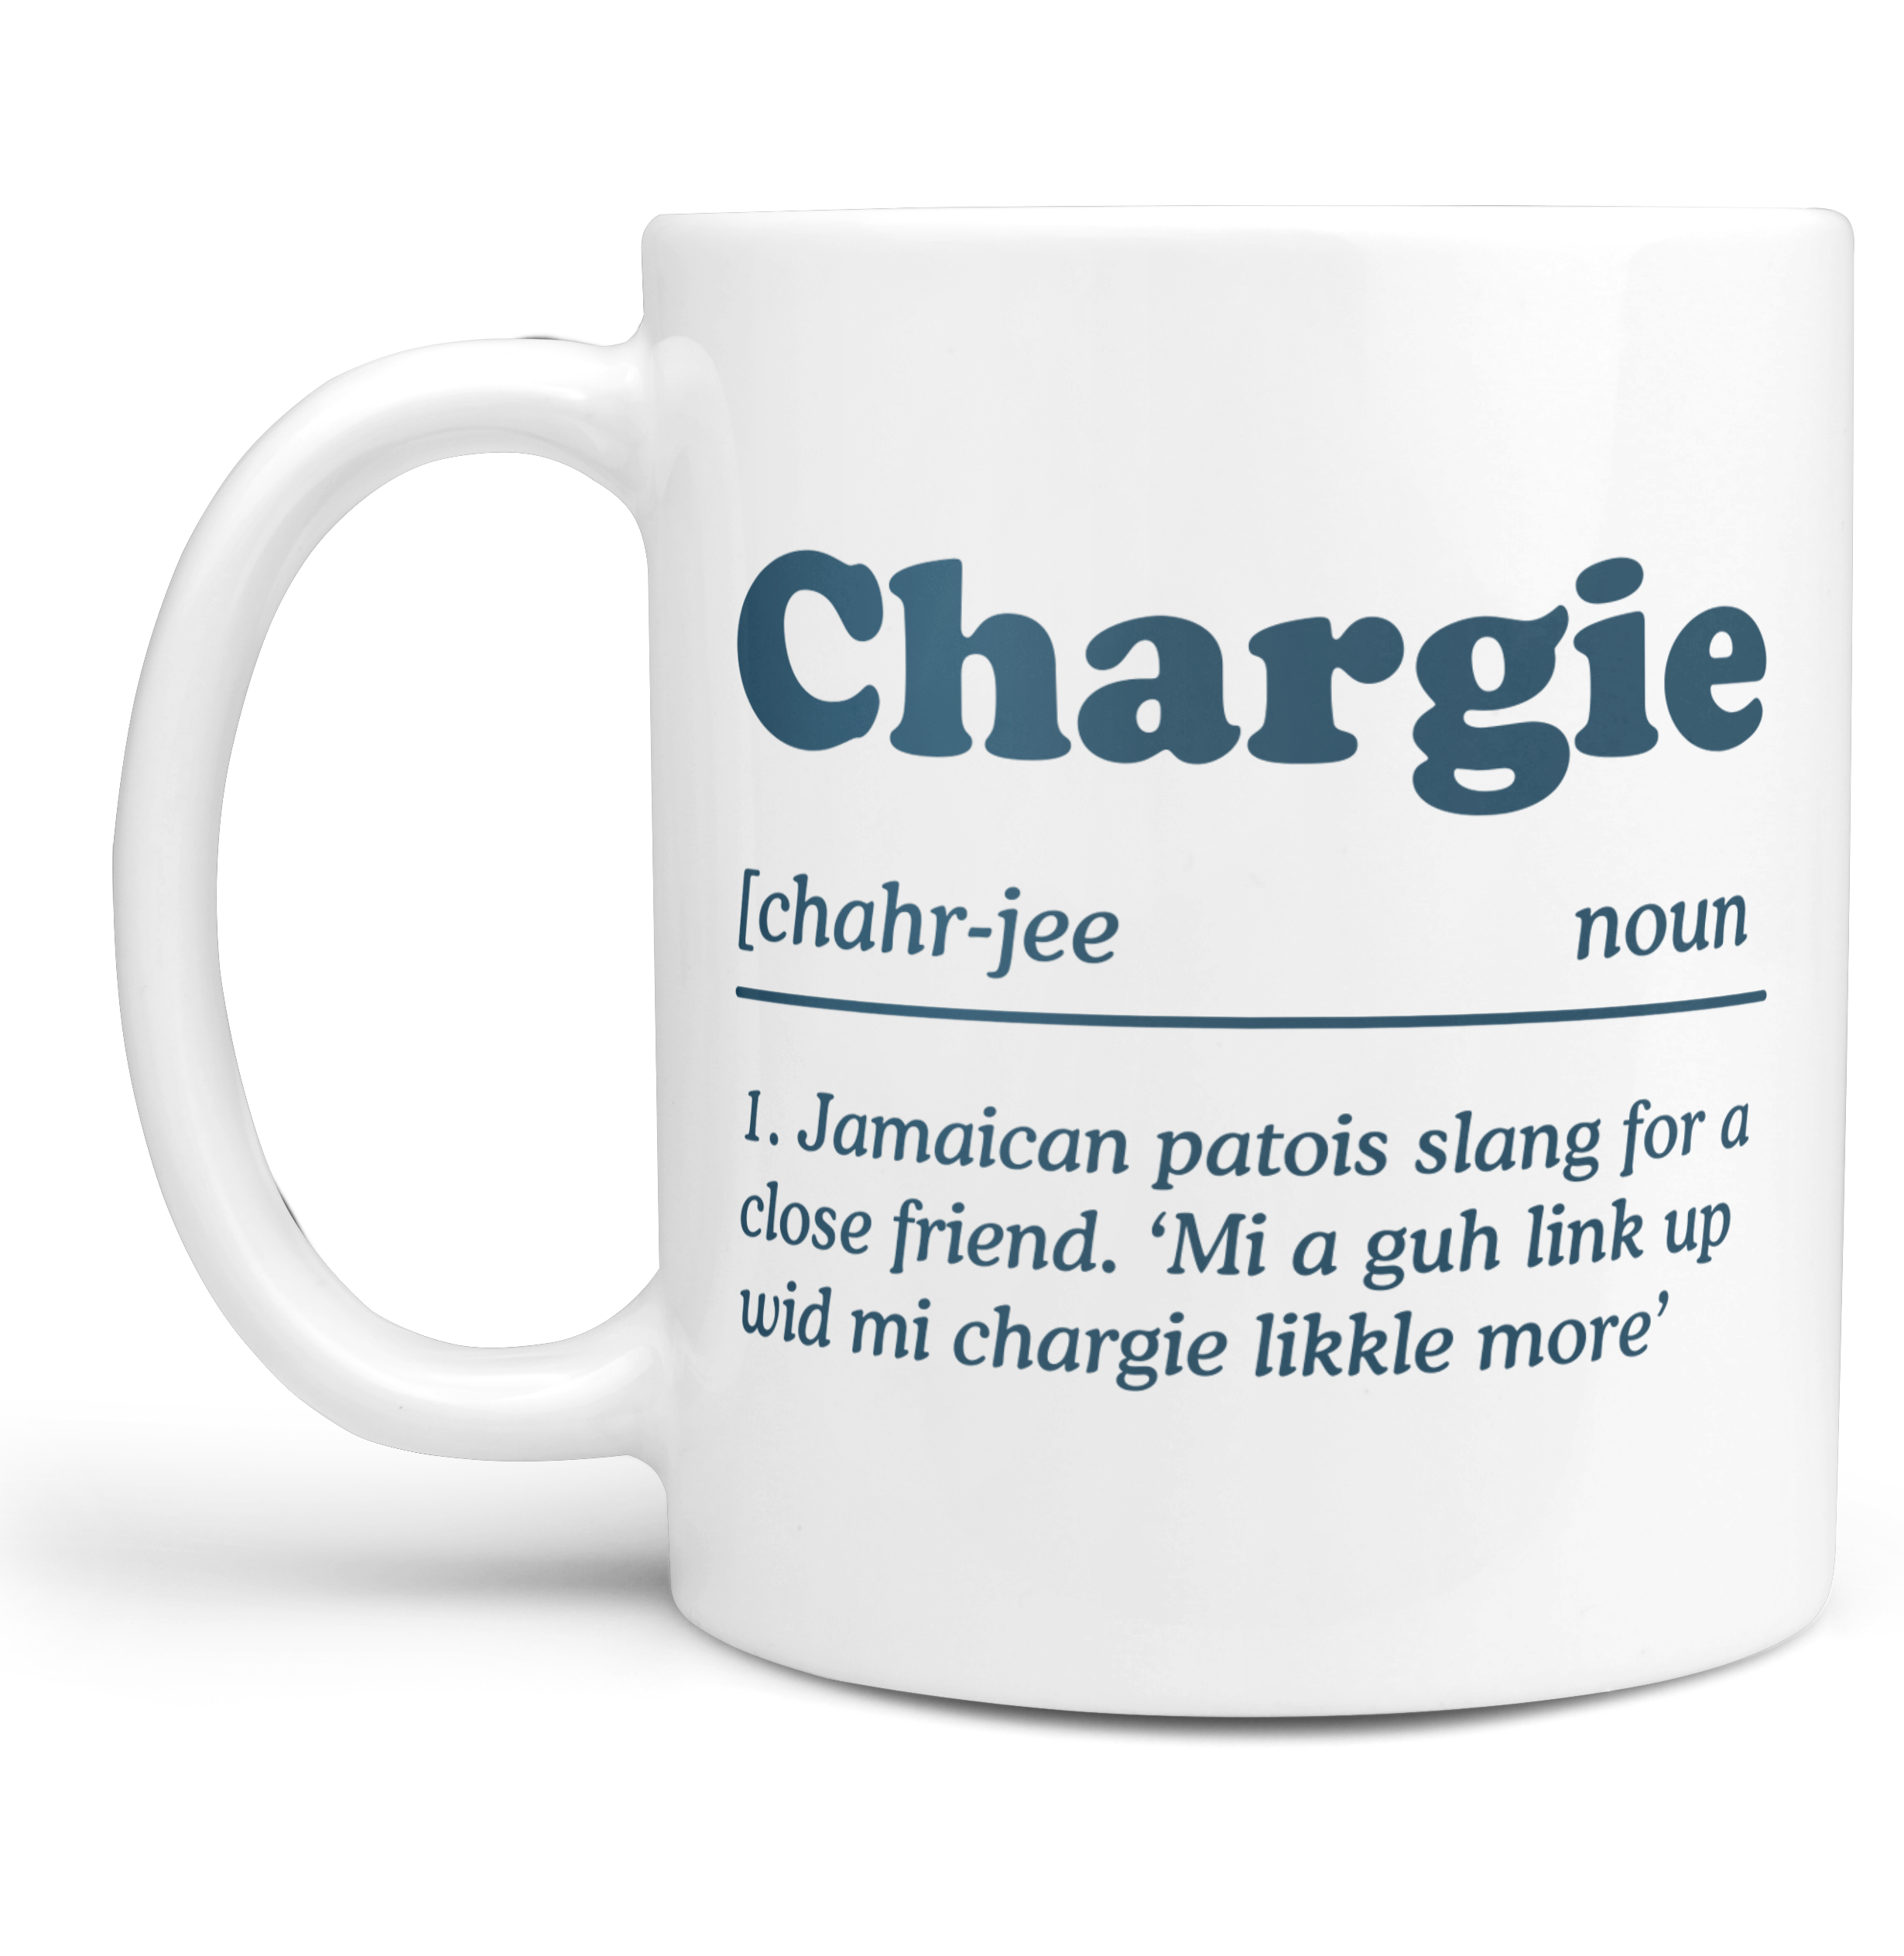 Define: Chargie